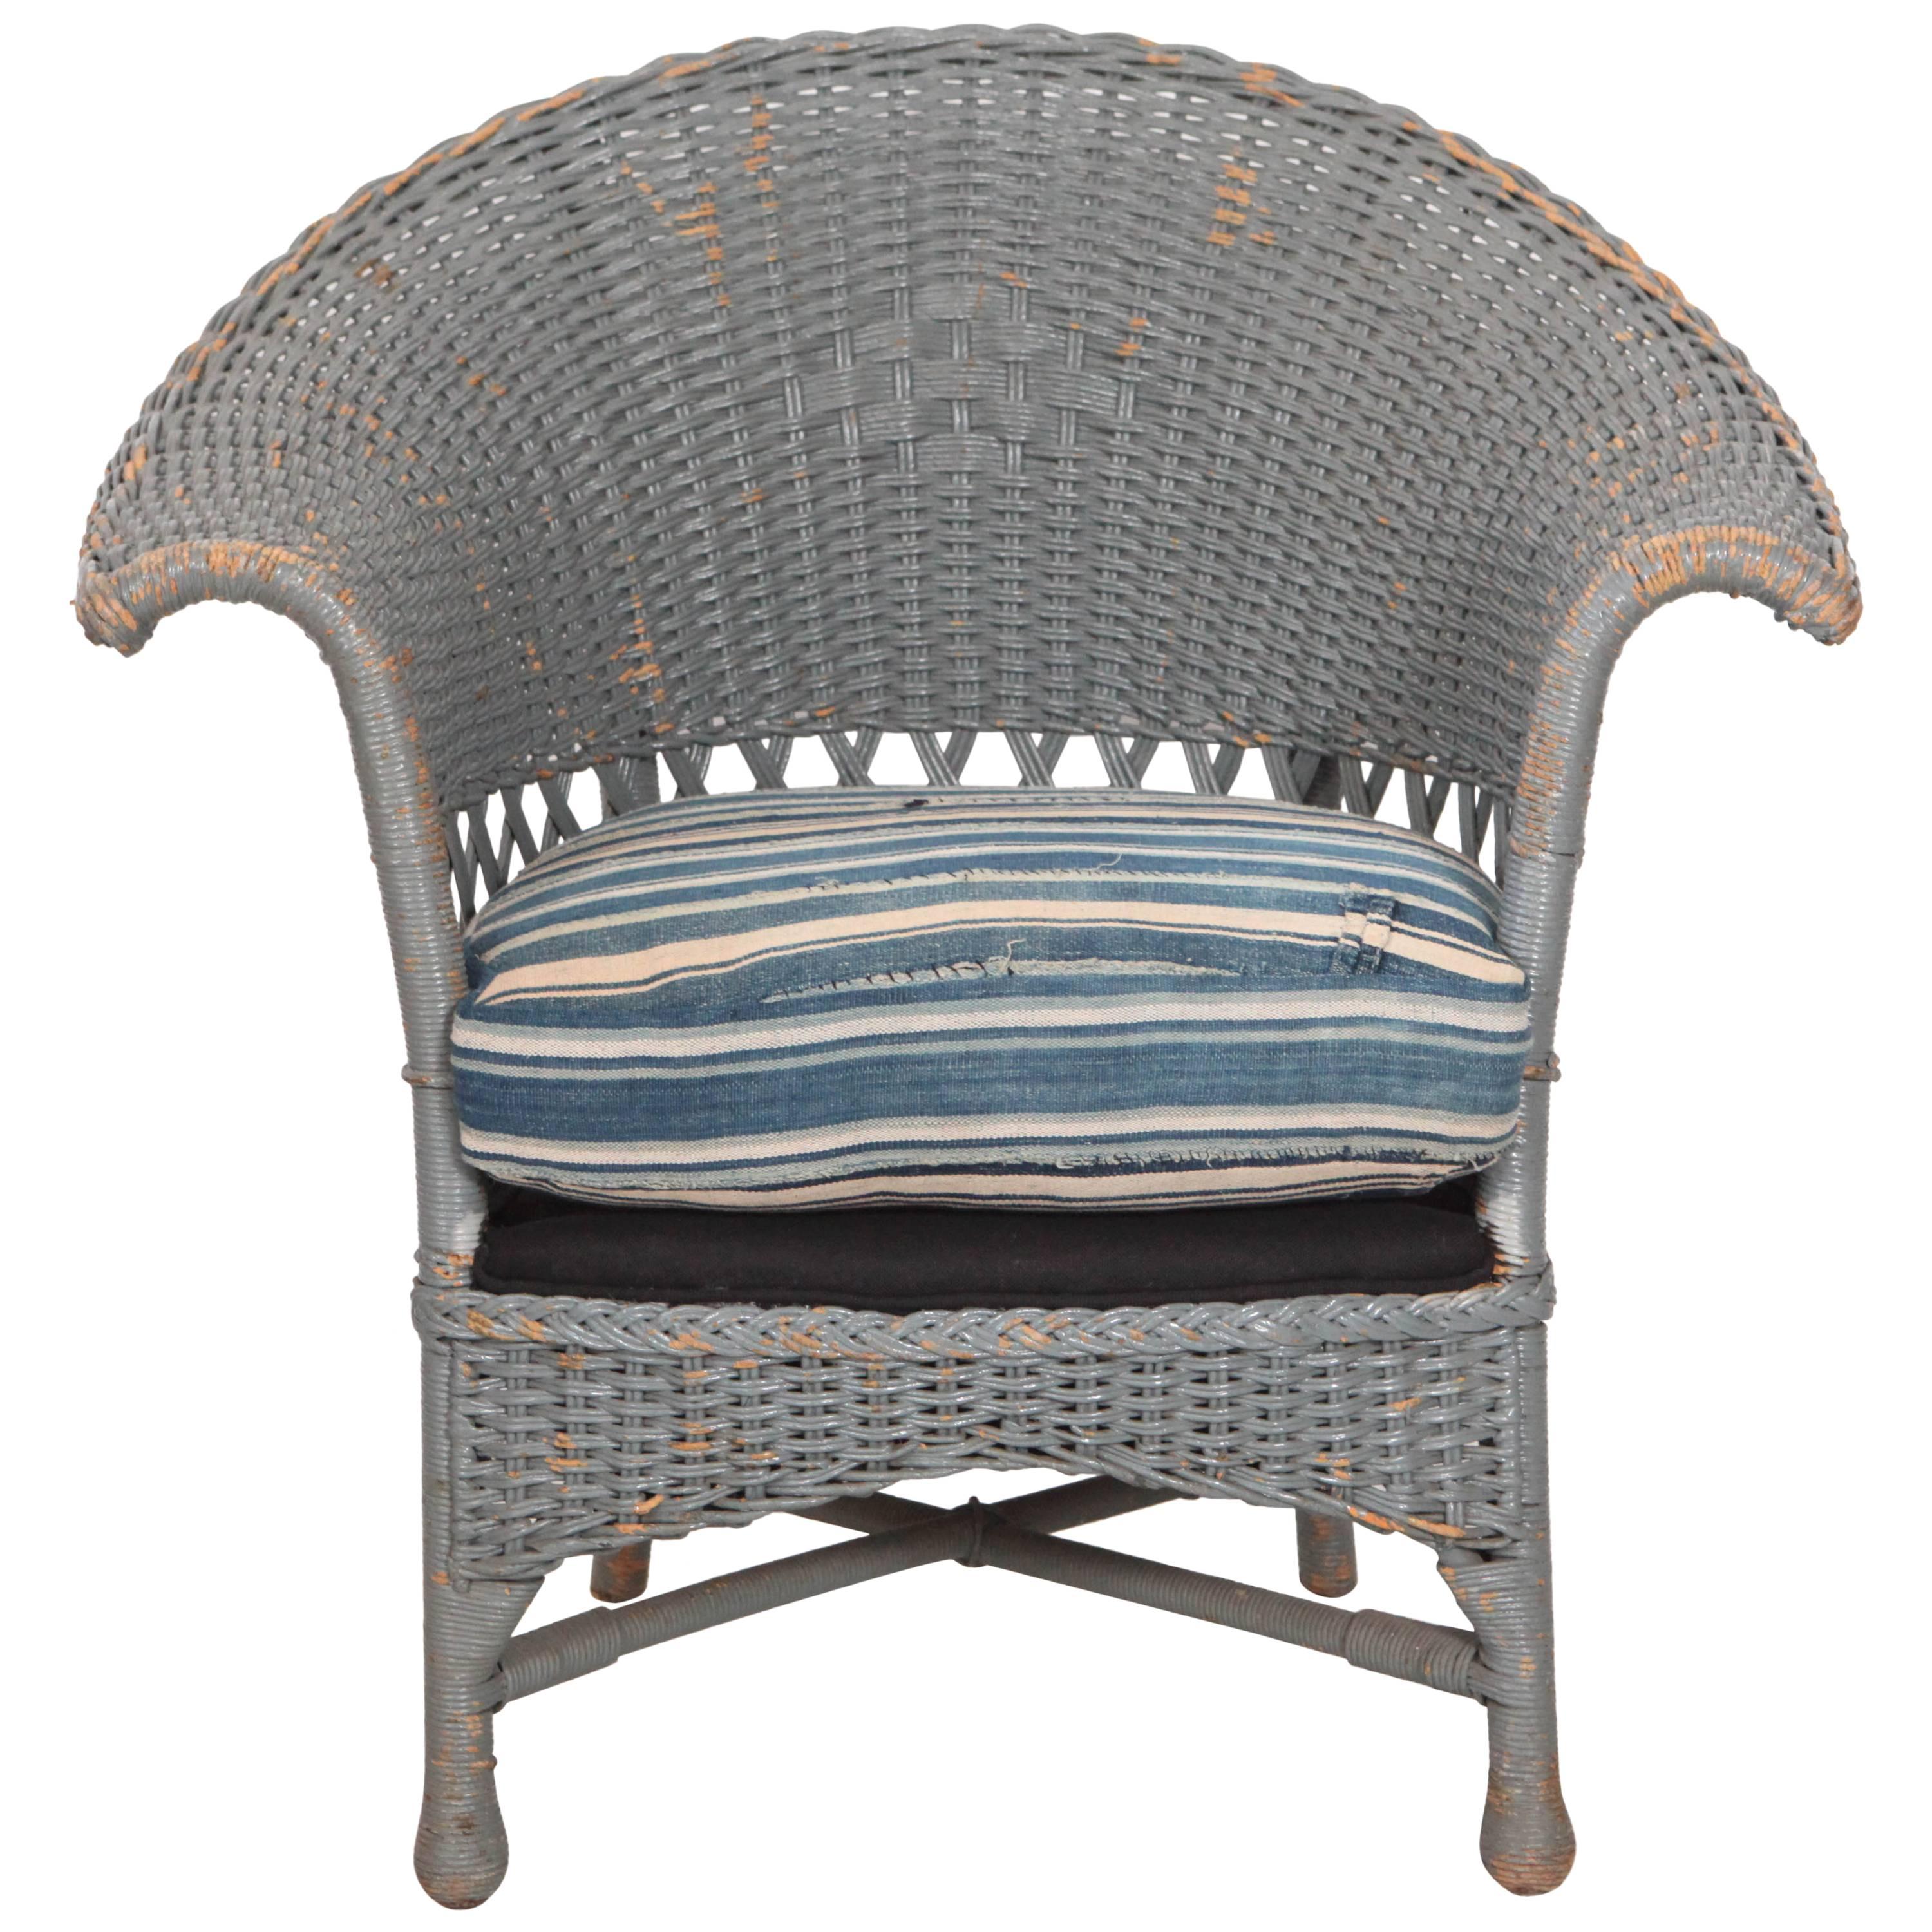 Vintage Wicker Veranda Chair with African Mudcloth Cushion